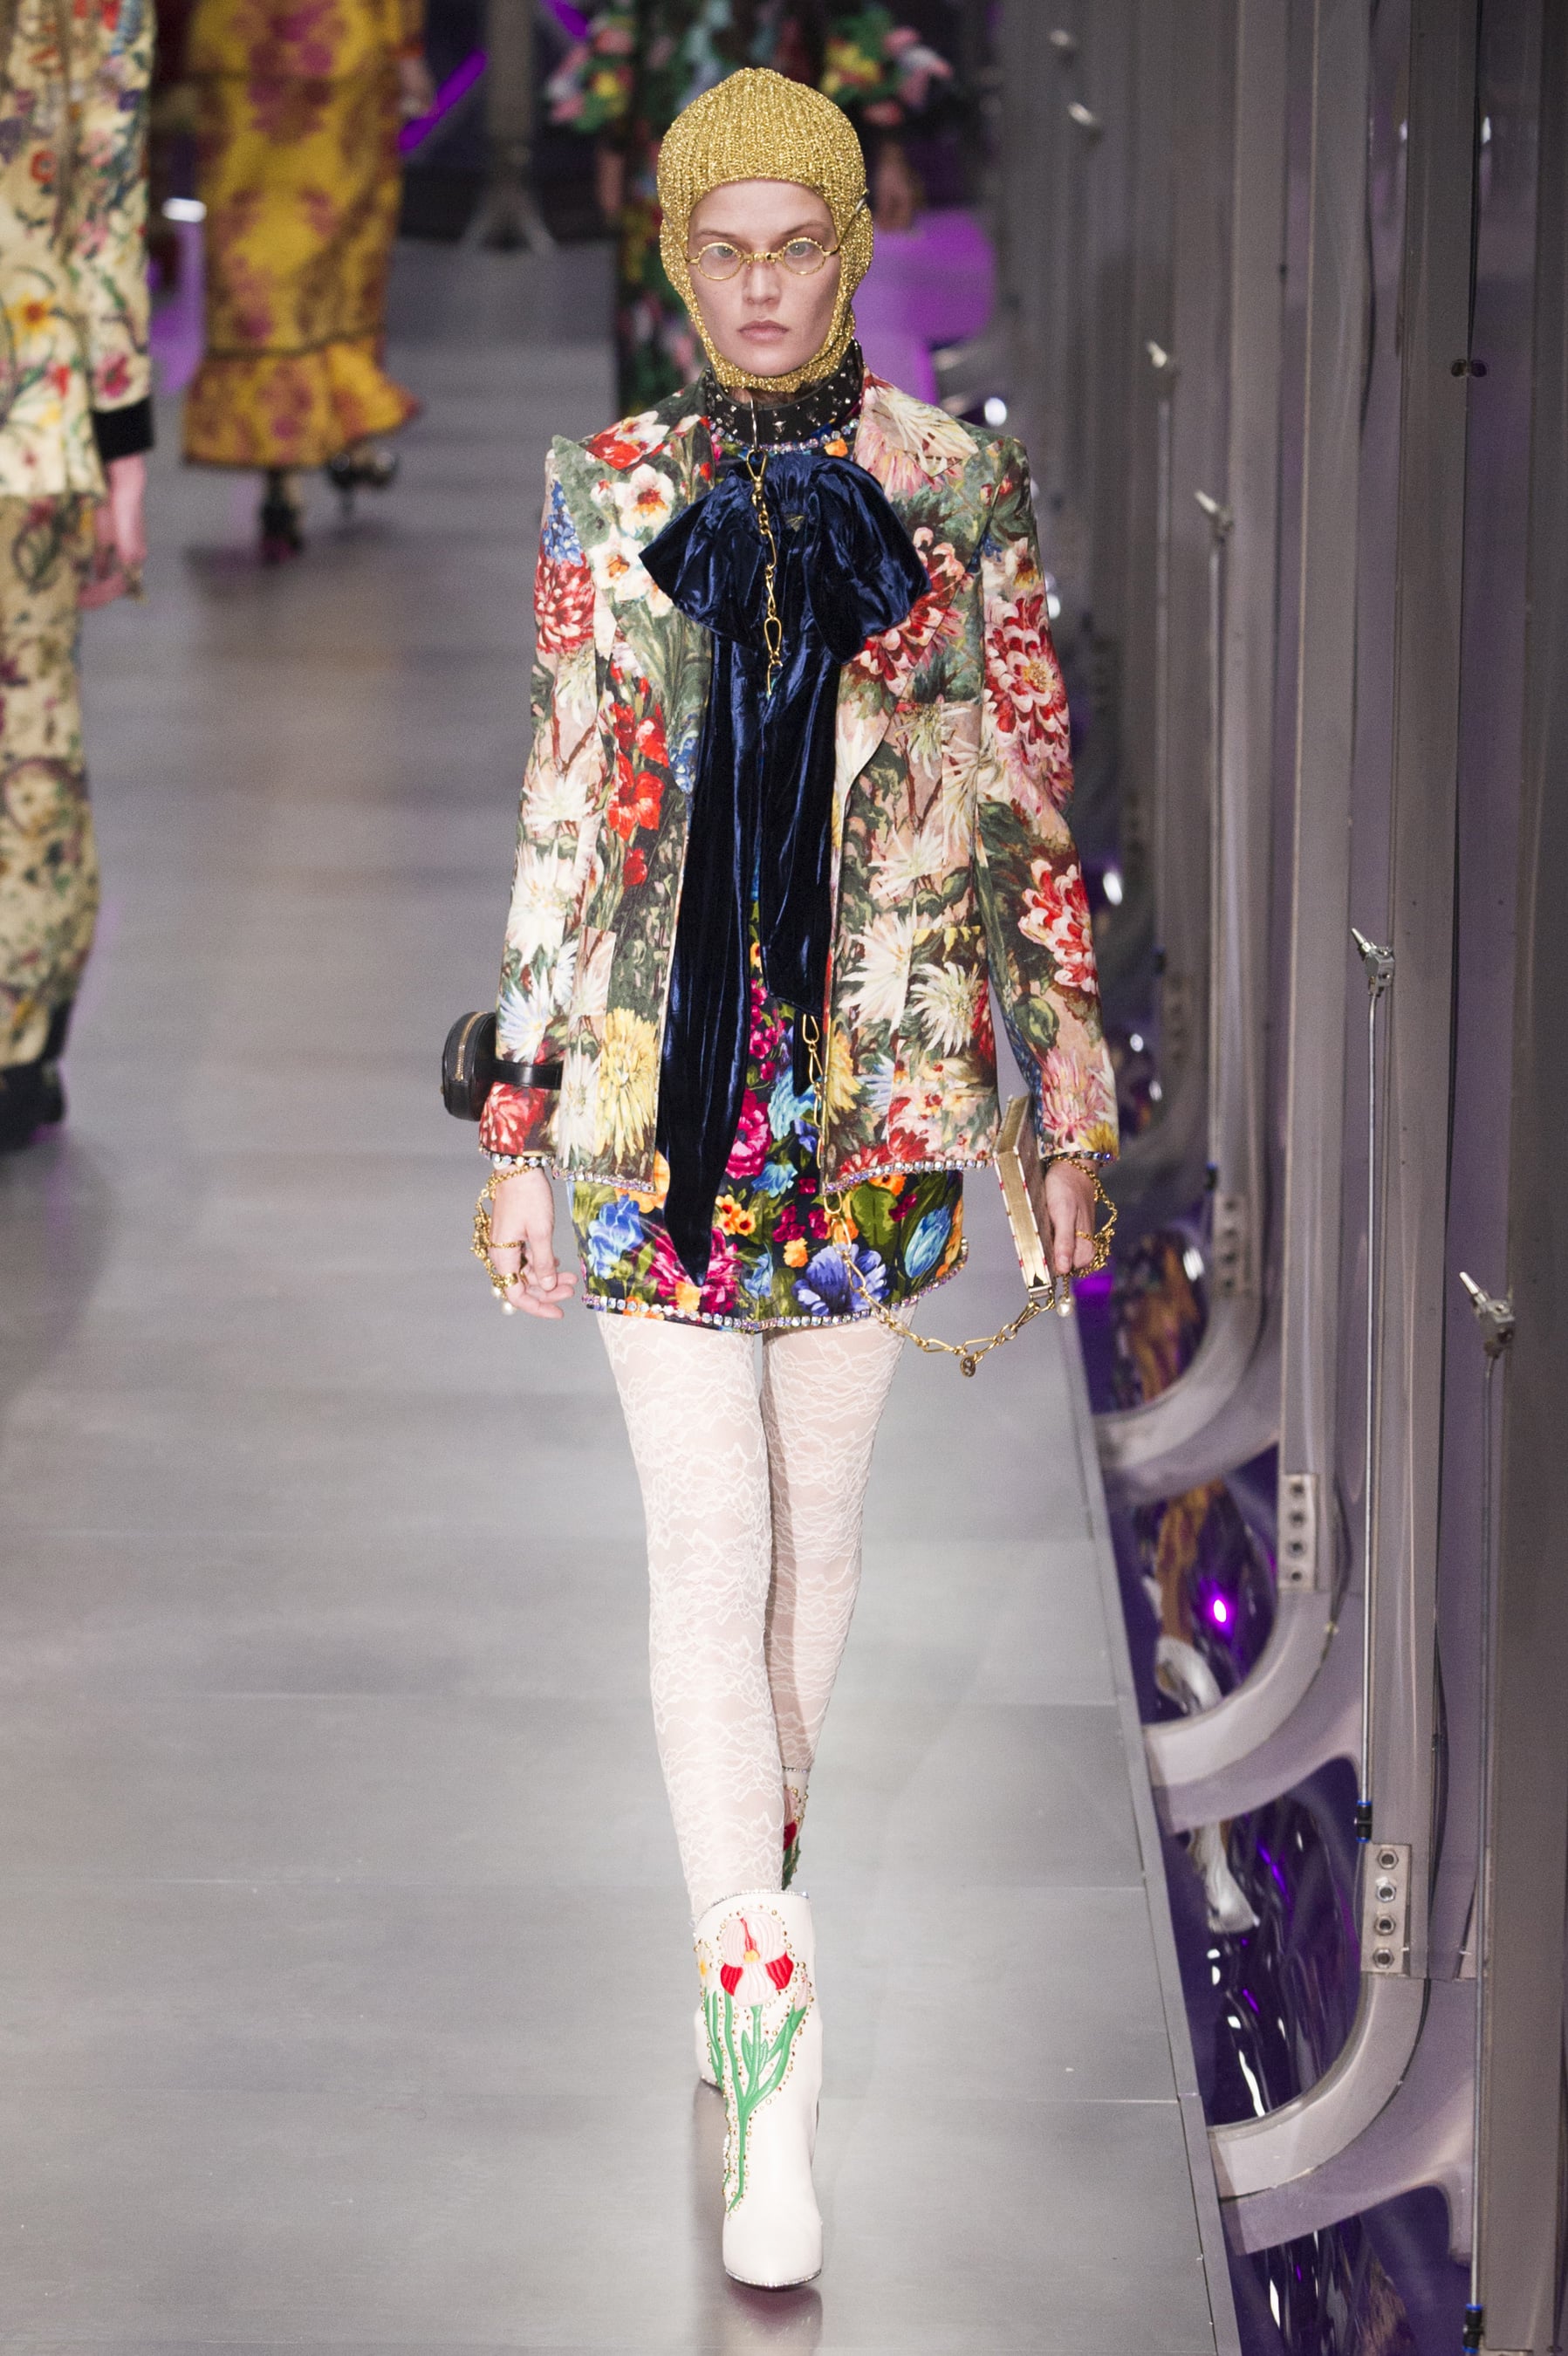 Fashion, Shopping & Style | Gucci's Fall Collection Calls For a Wild, Diverse, Fantastical Future | POPSUGAR Photo 8